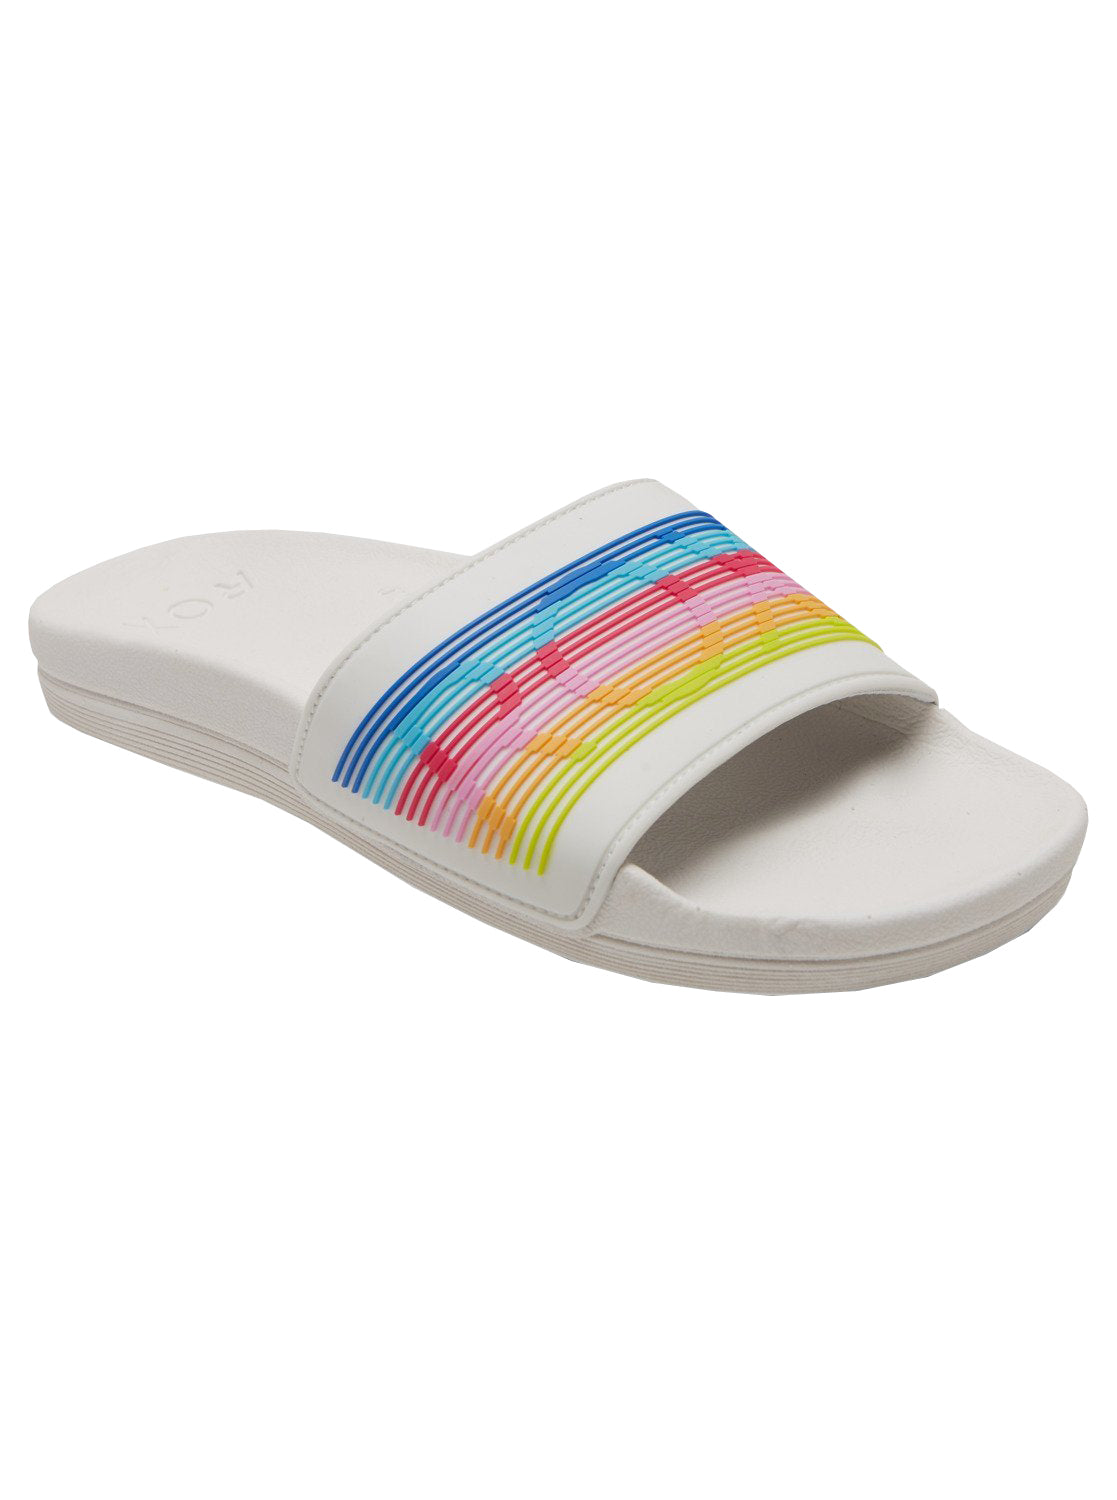 Roxy Slippy LX Womens Sandal TRW-White-Rainbow 8